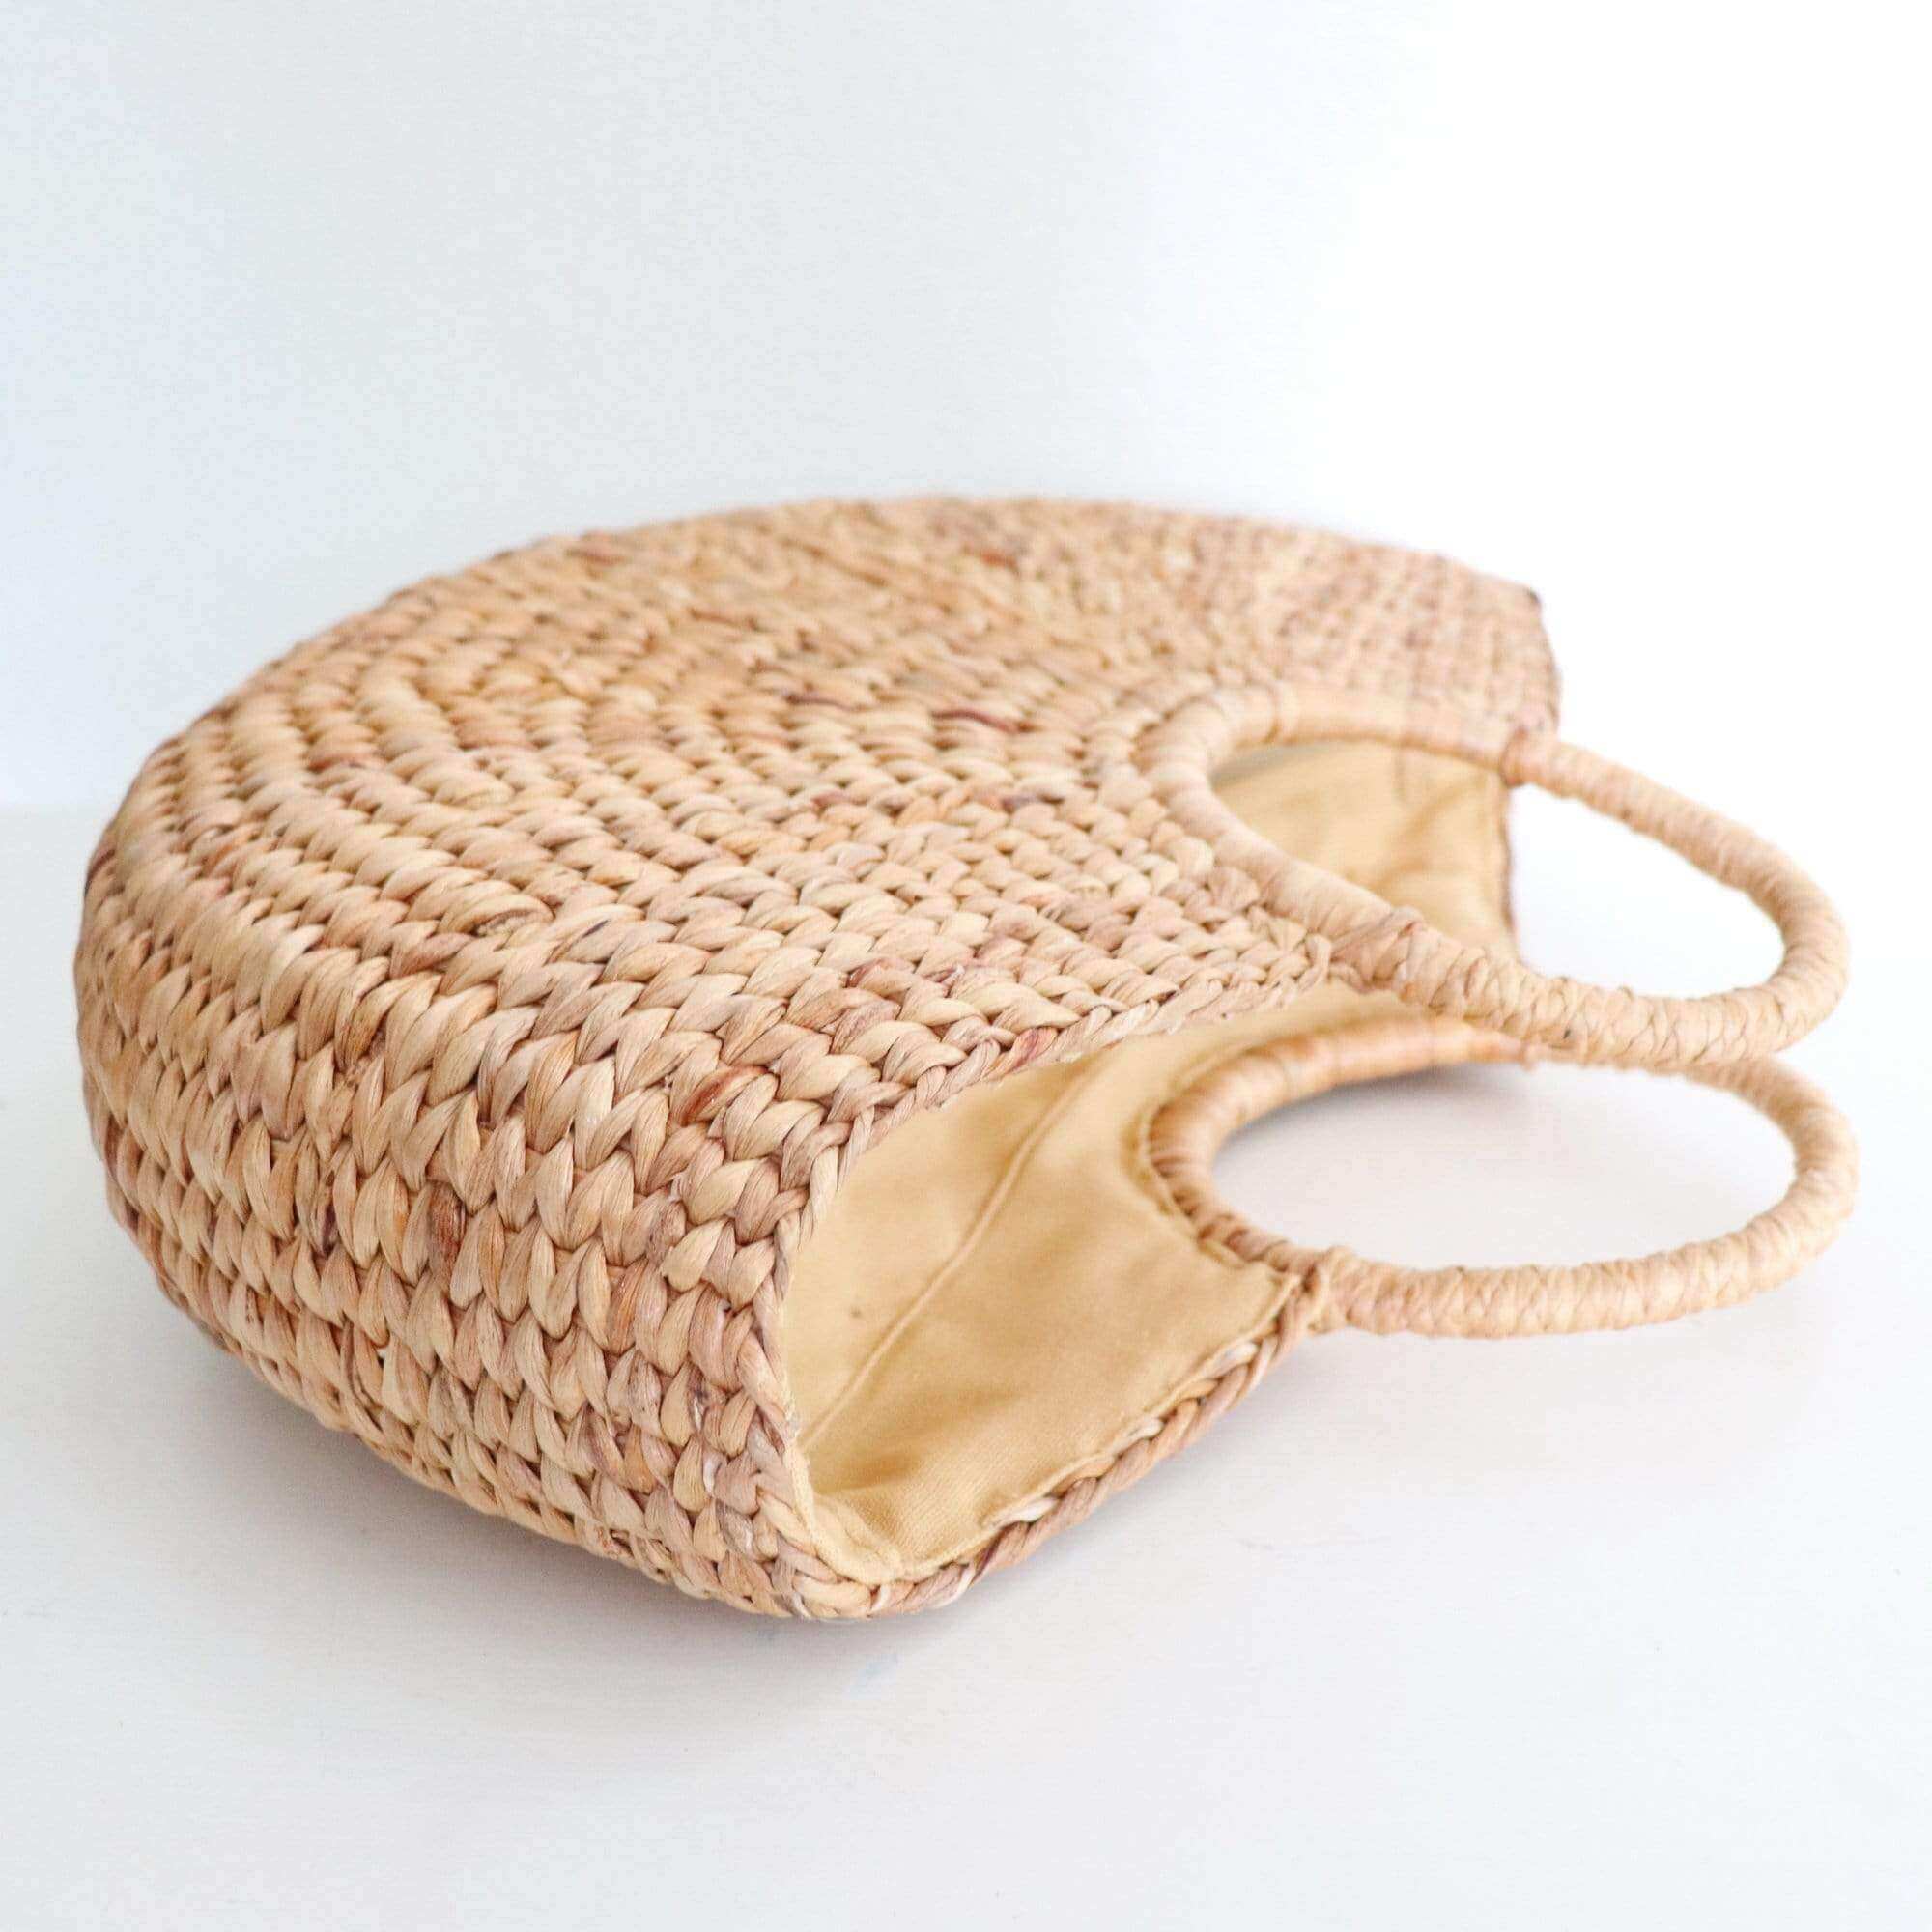 CHANISA - Straw Basket Bag